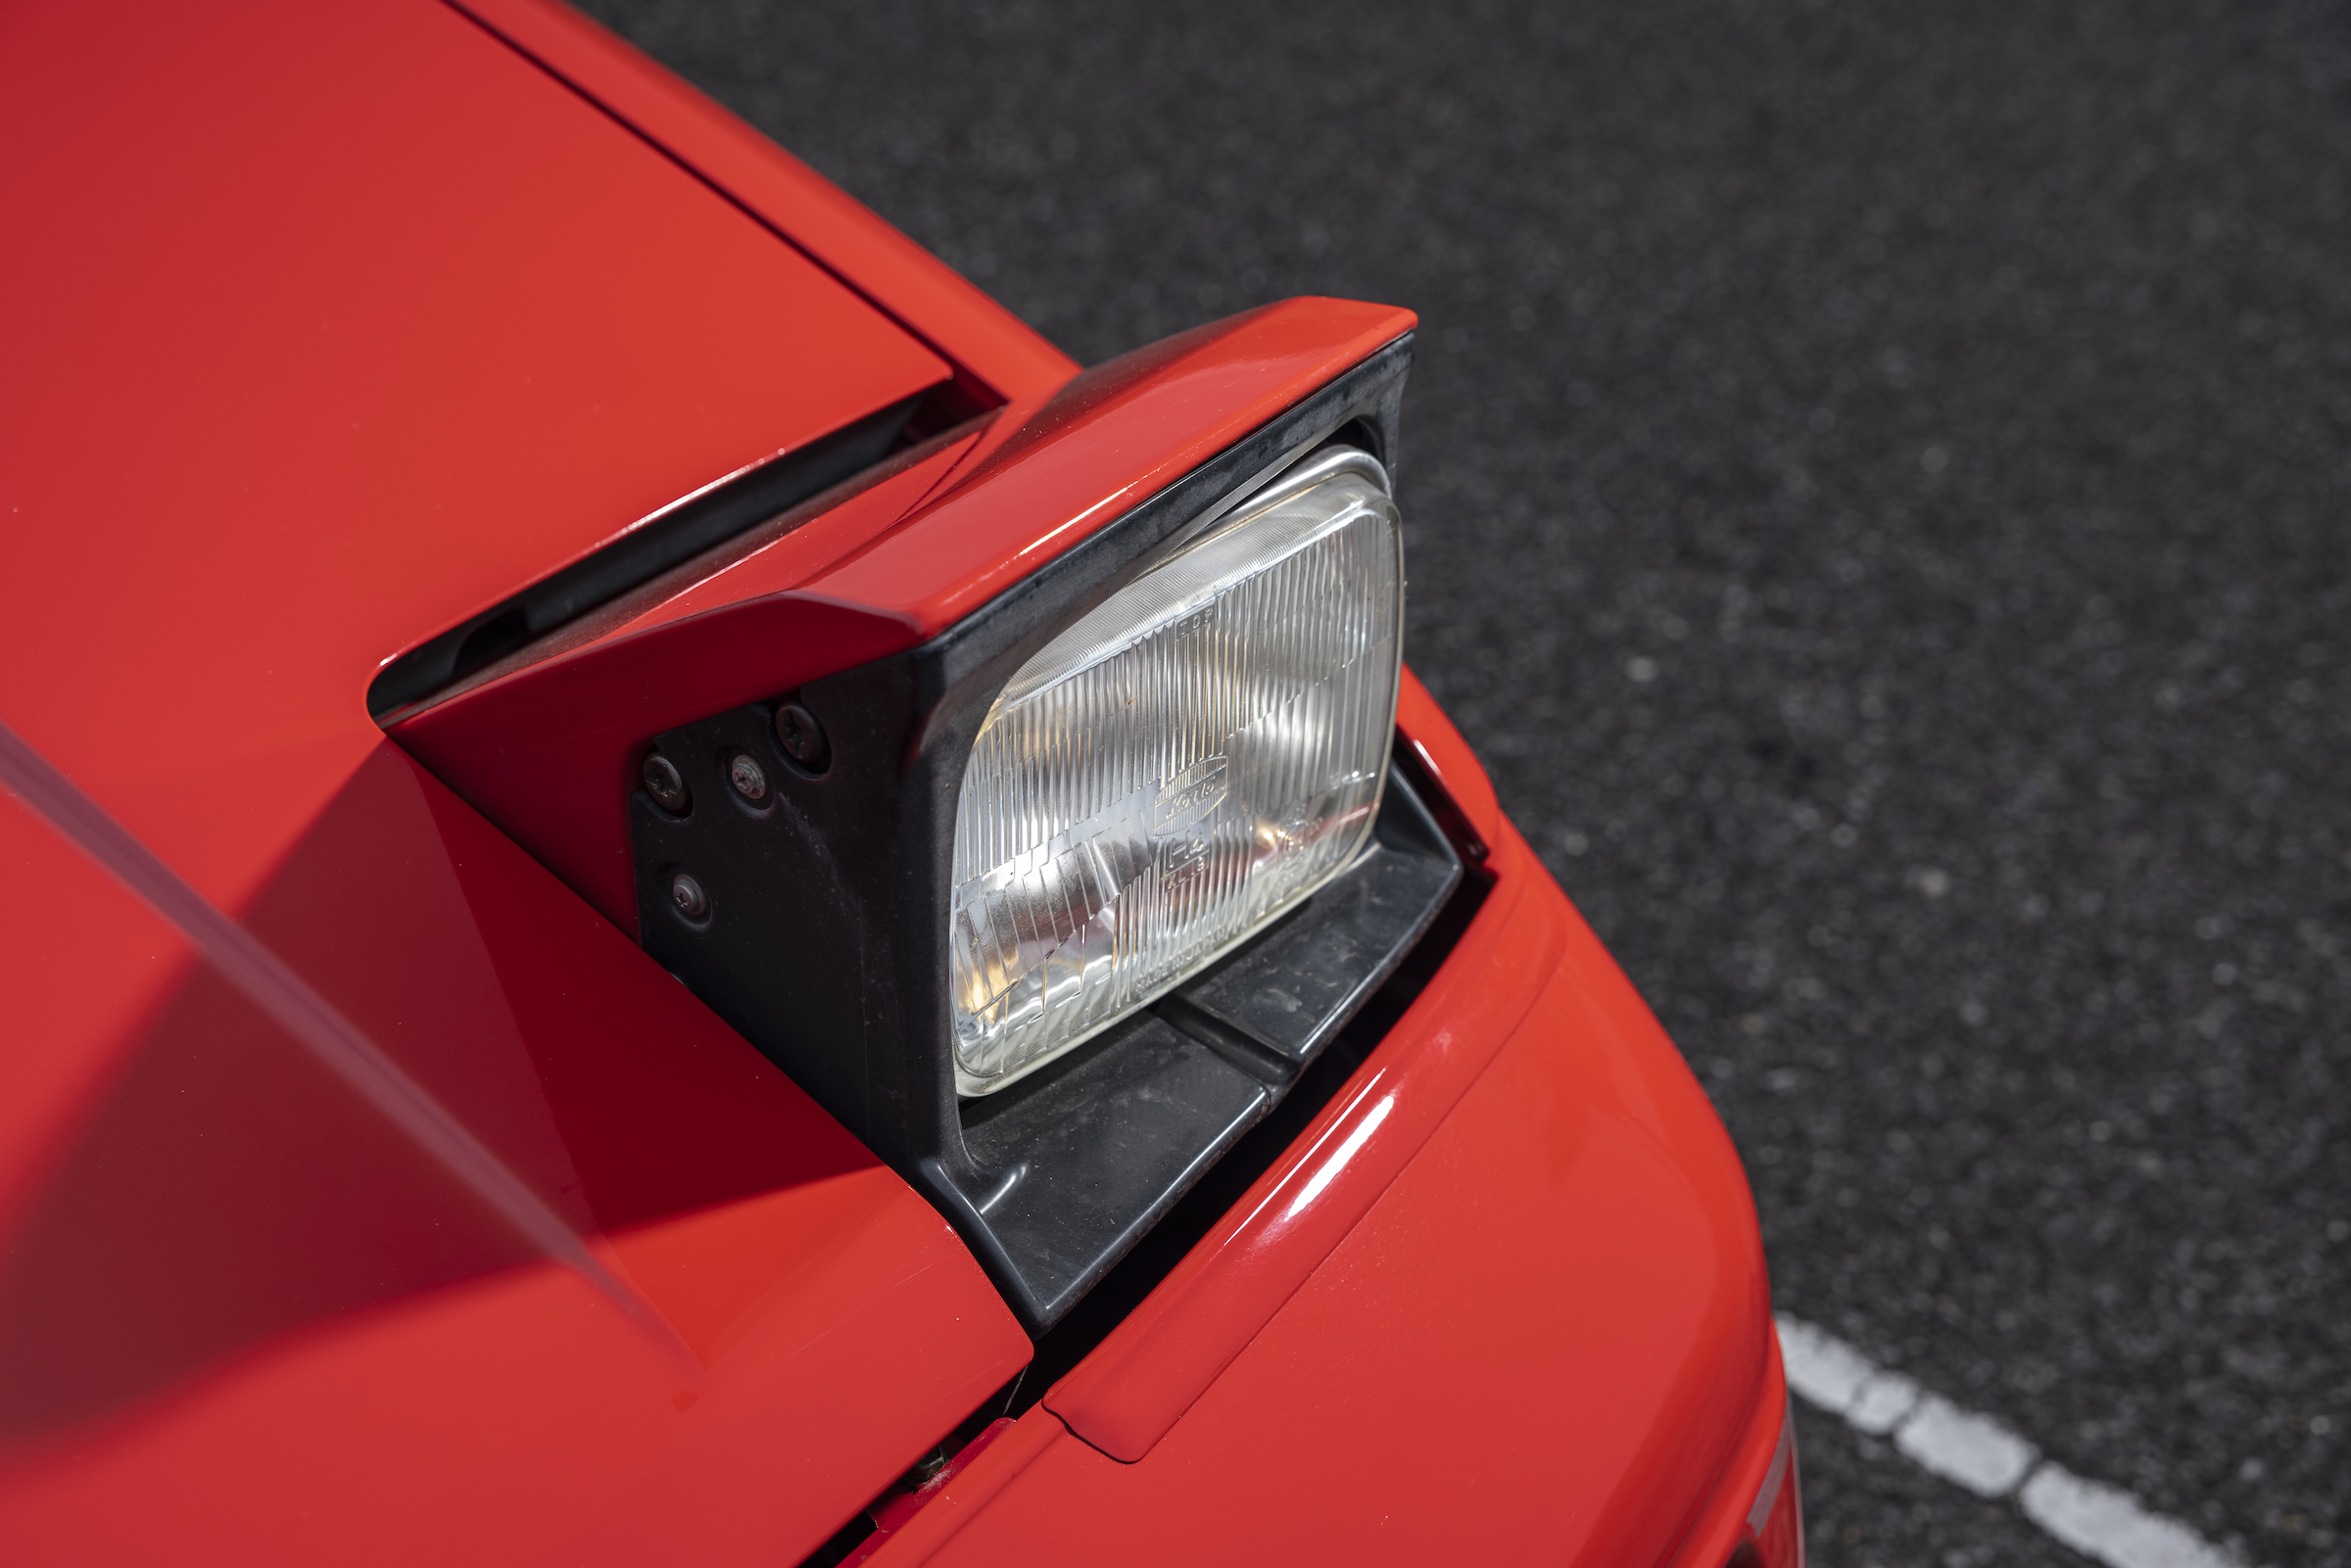 Toyota MR2 AW11 pop-up headlight